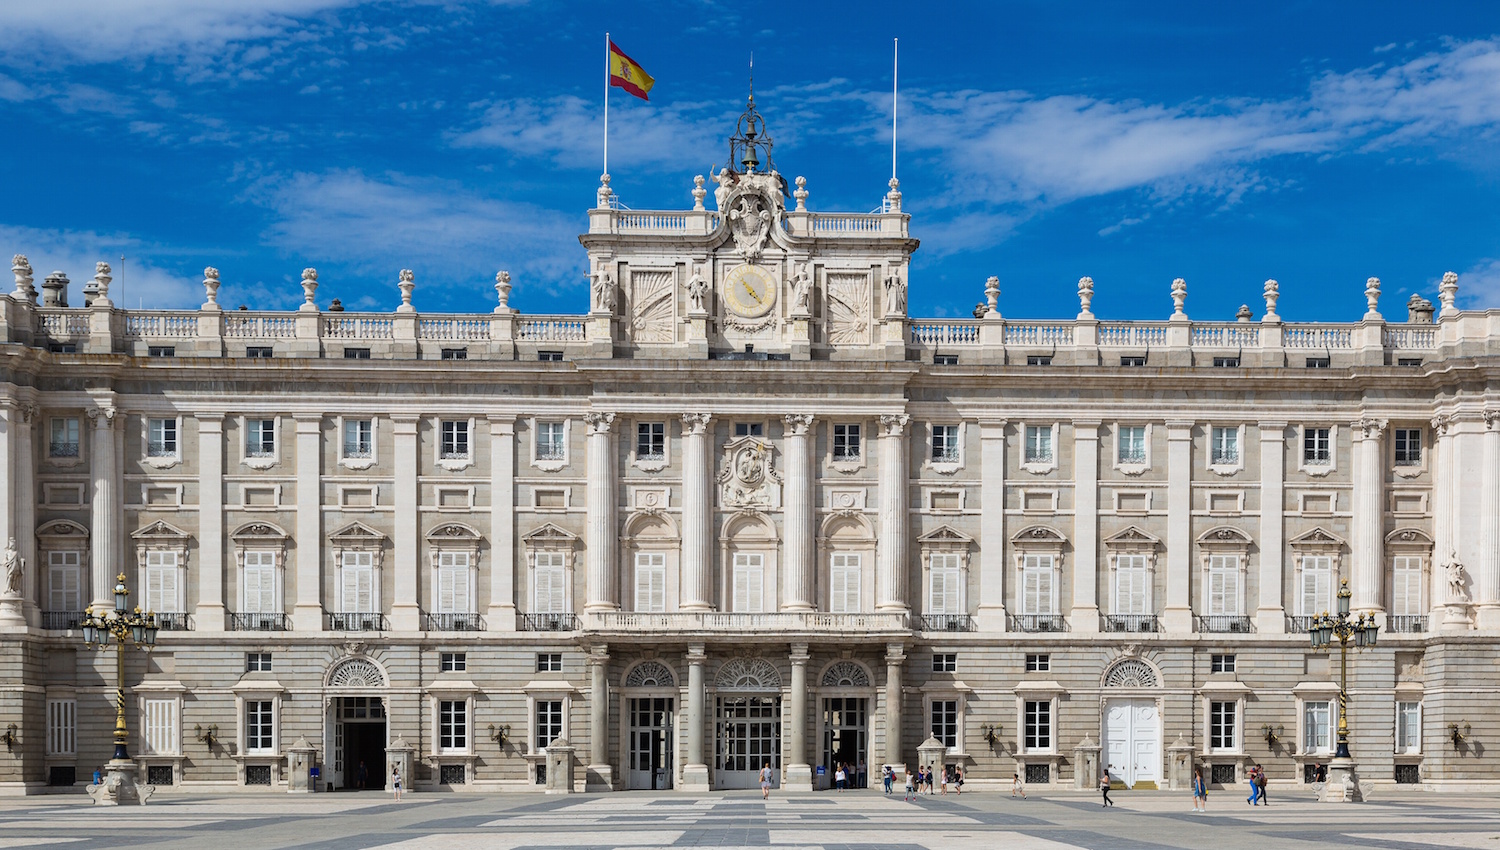 <img src="ana.jpg" alt="ana royal palace of madrid city breaks"> 